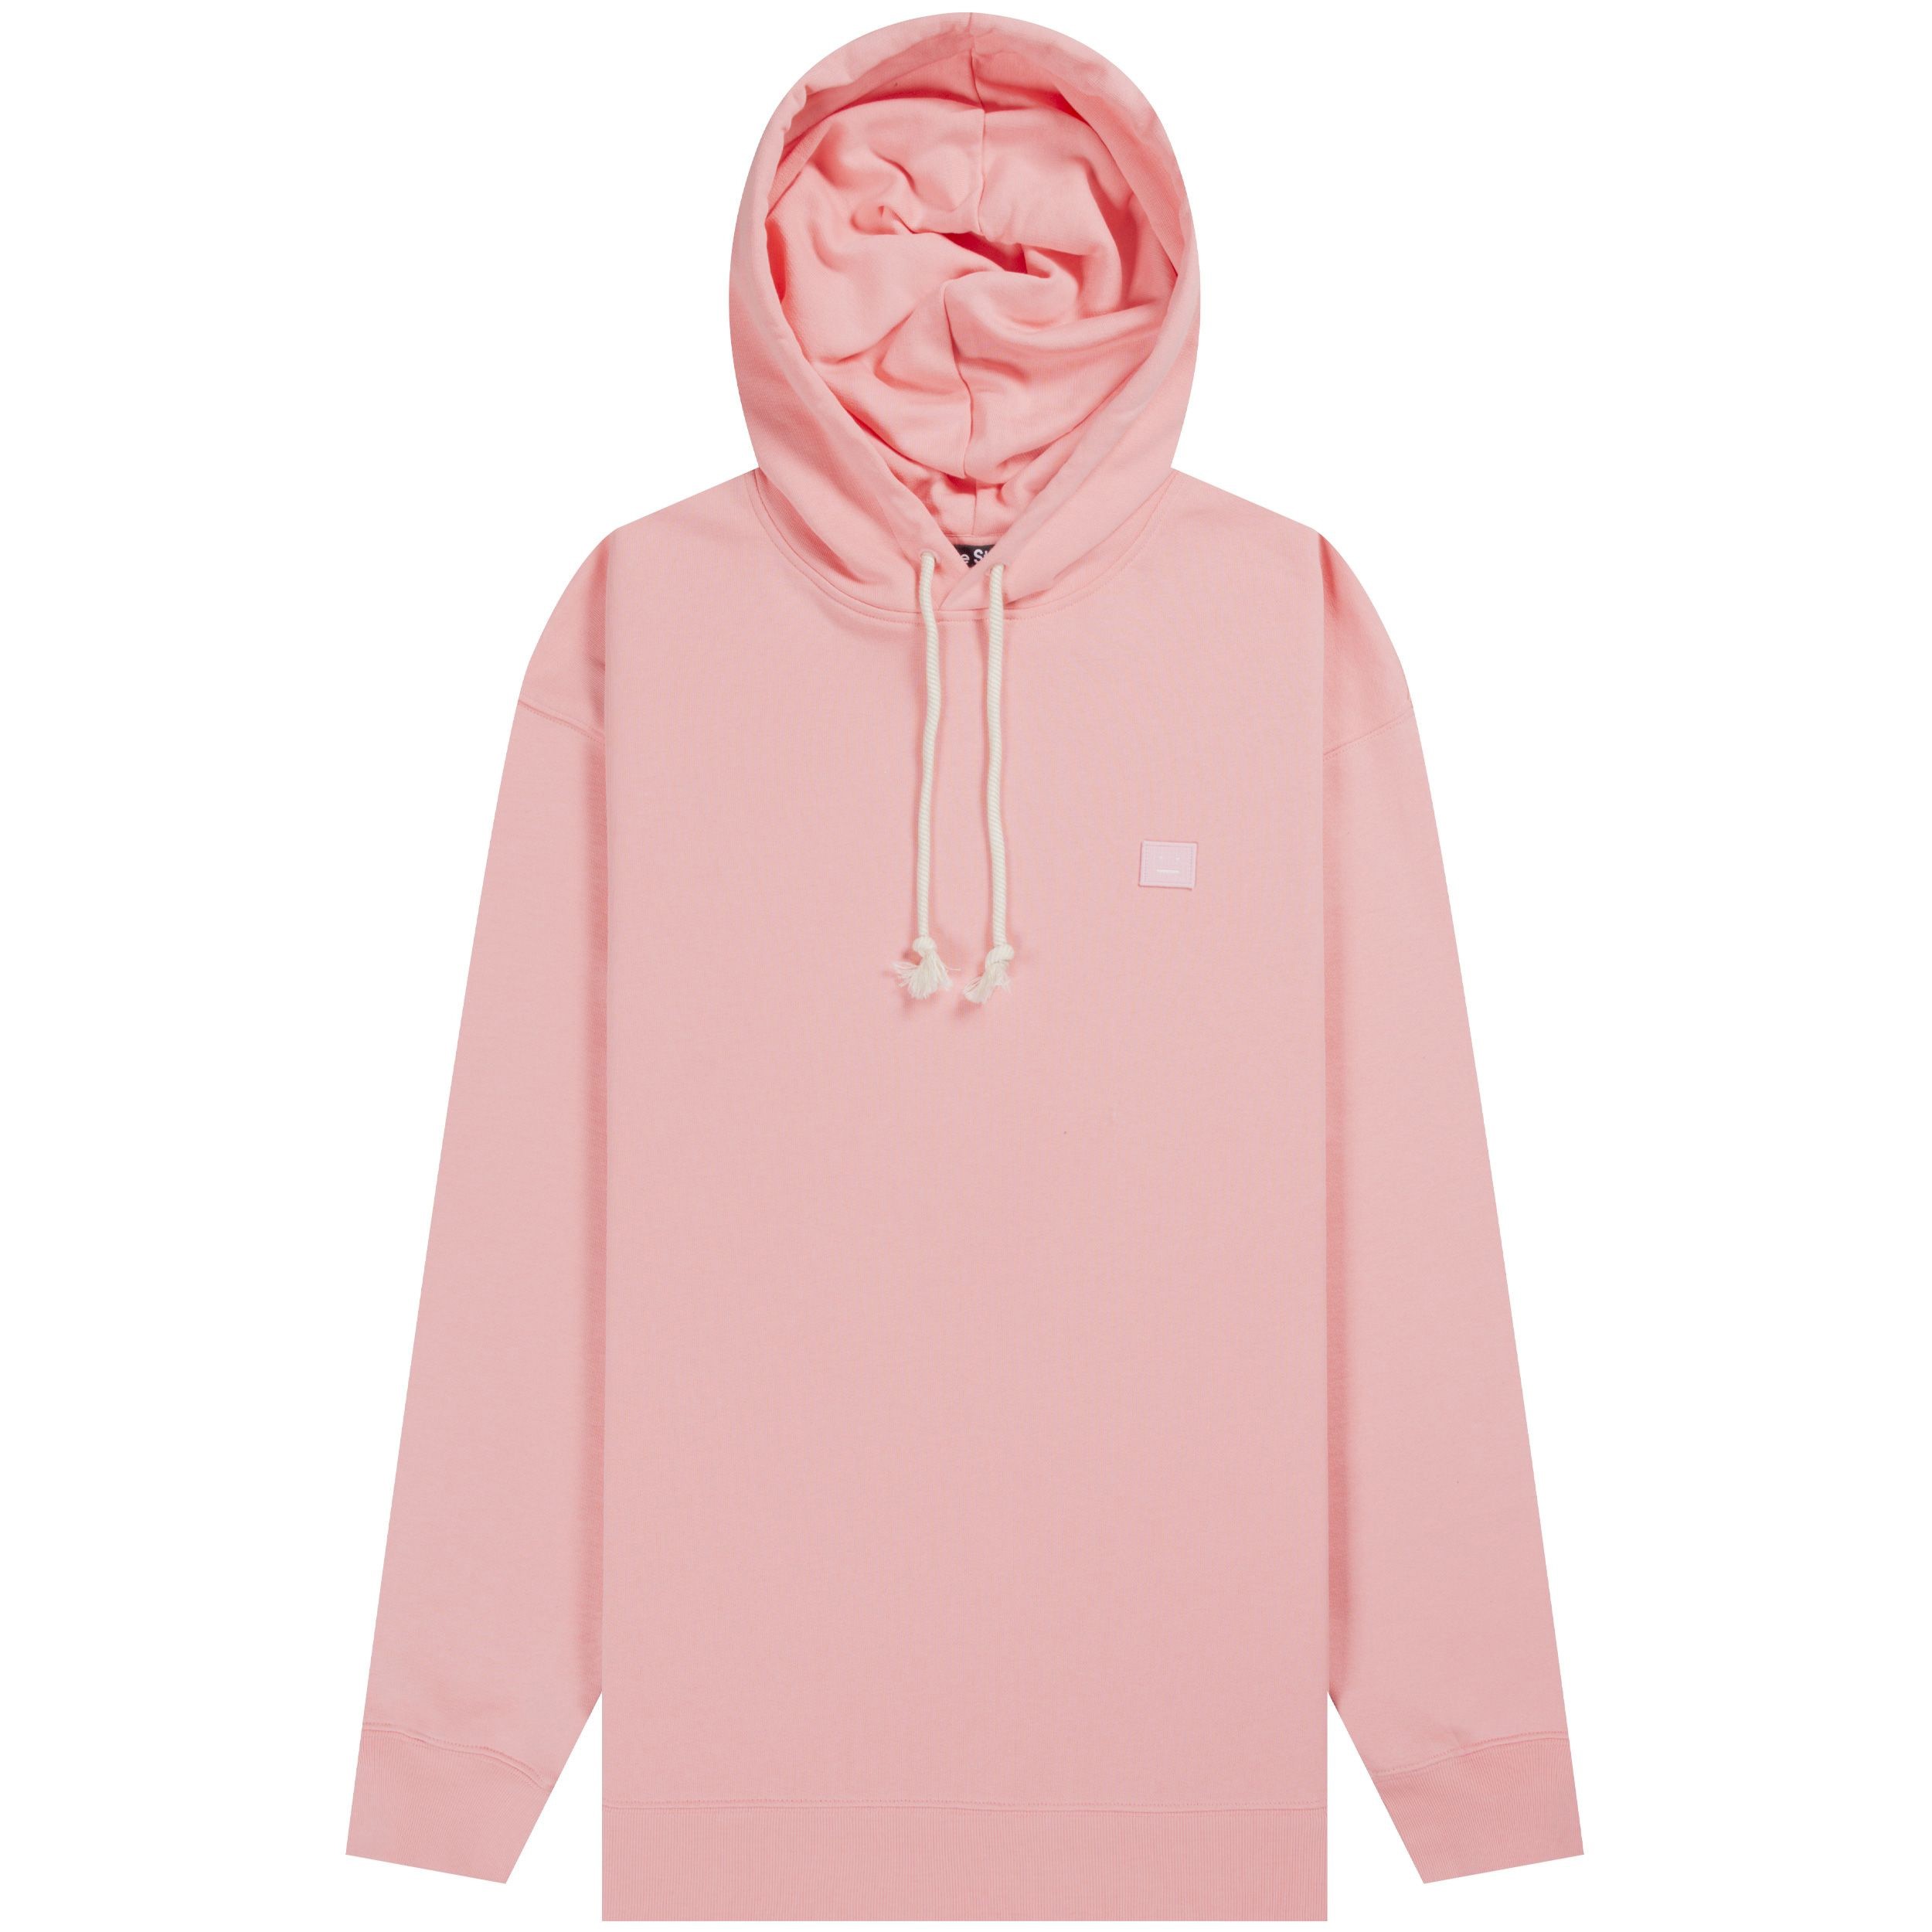 Acne Studios 'Farrin Face' Hooded Sweatshirt Blush Pink